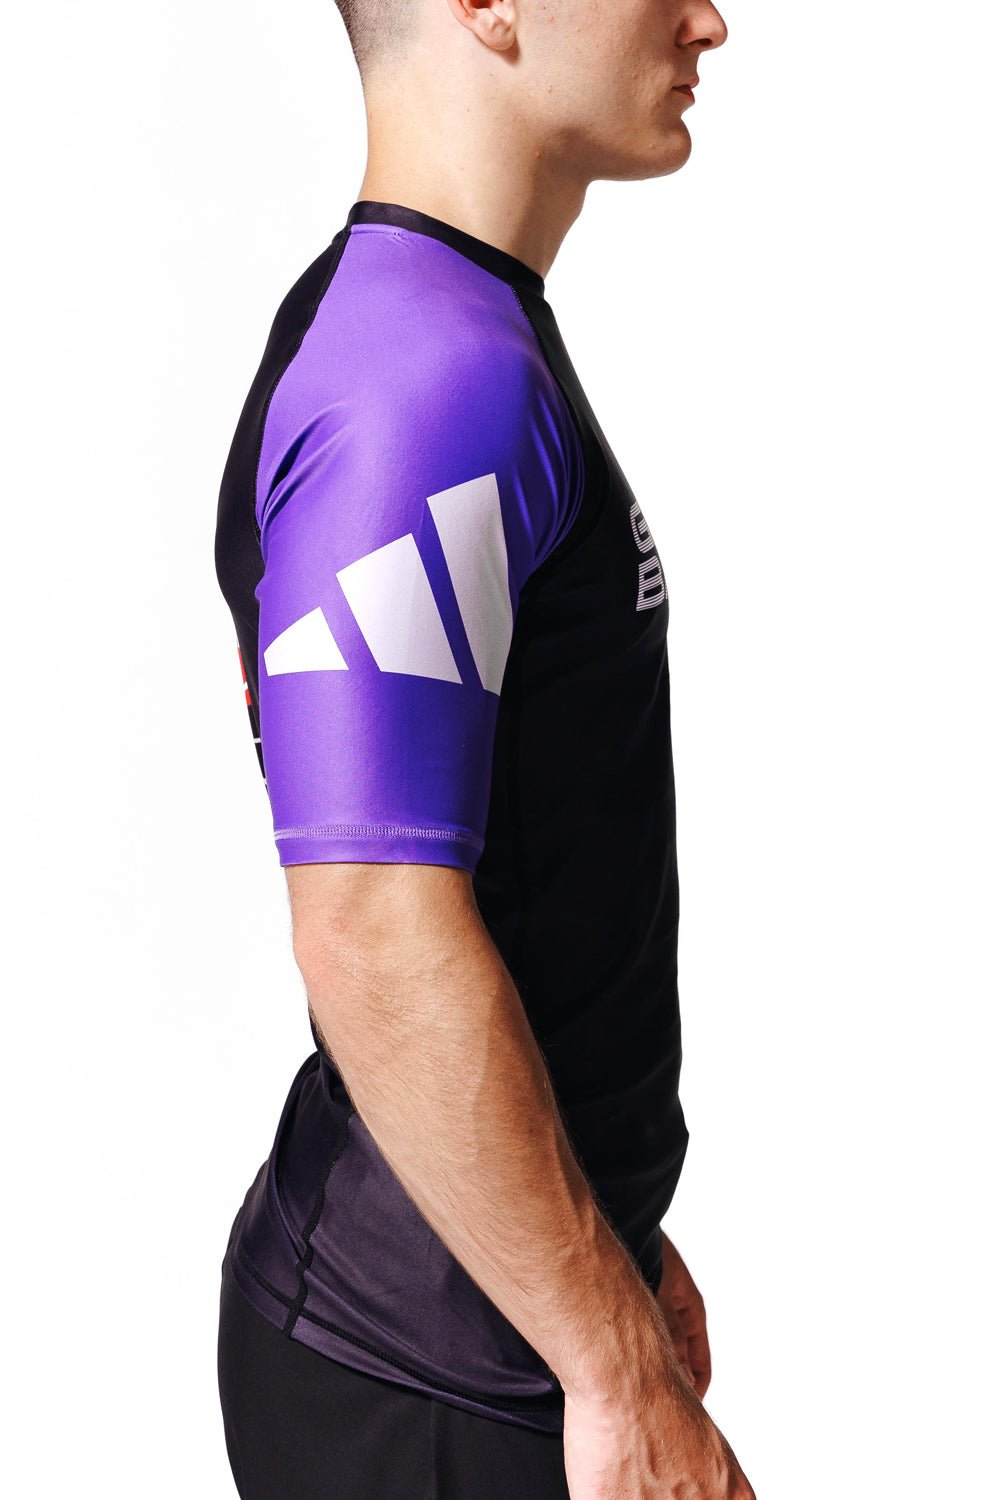 Barra Performance Ranked Rashguard S/S by Adidas - Purple